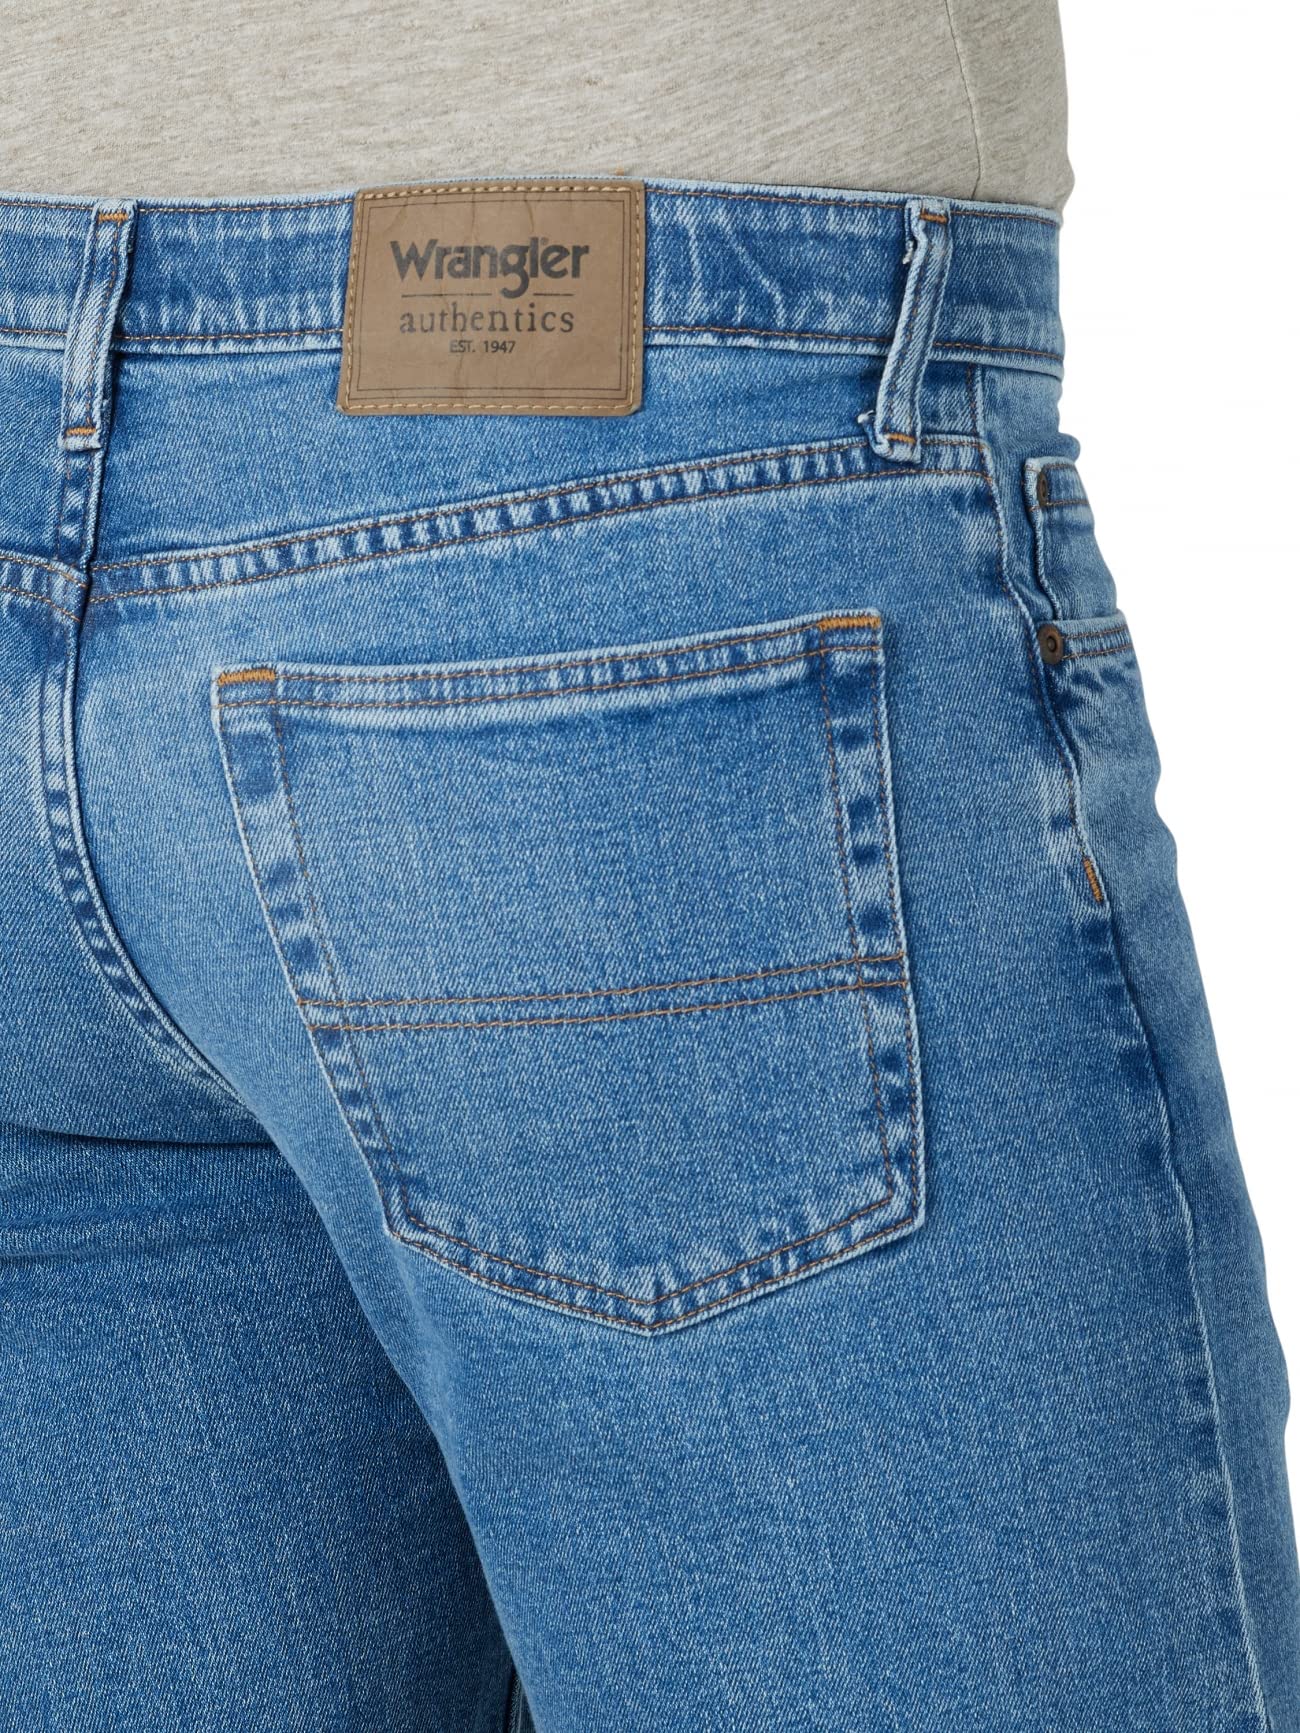 Wrangler Authentics Men's Big & Tall Comfort Flex Waist Relaxed Fit Jean, Leon, 54W x 32L